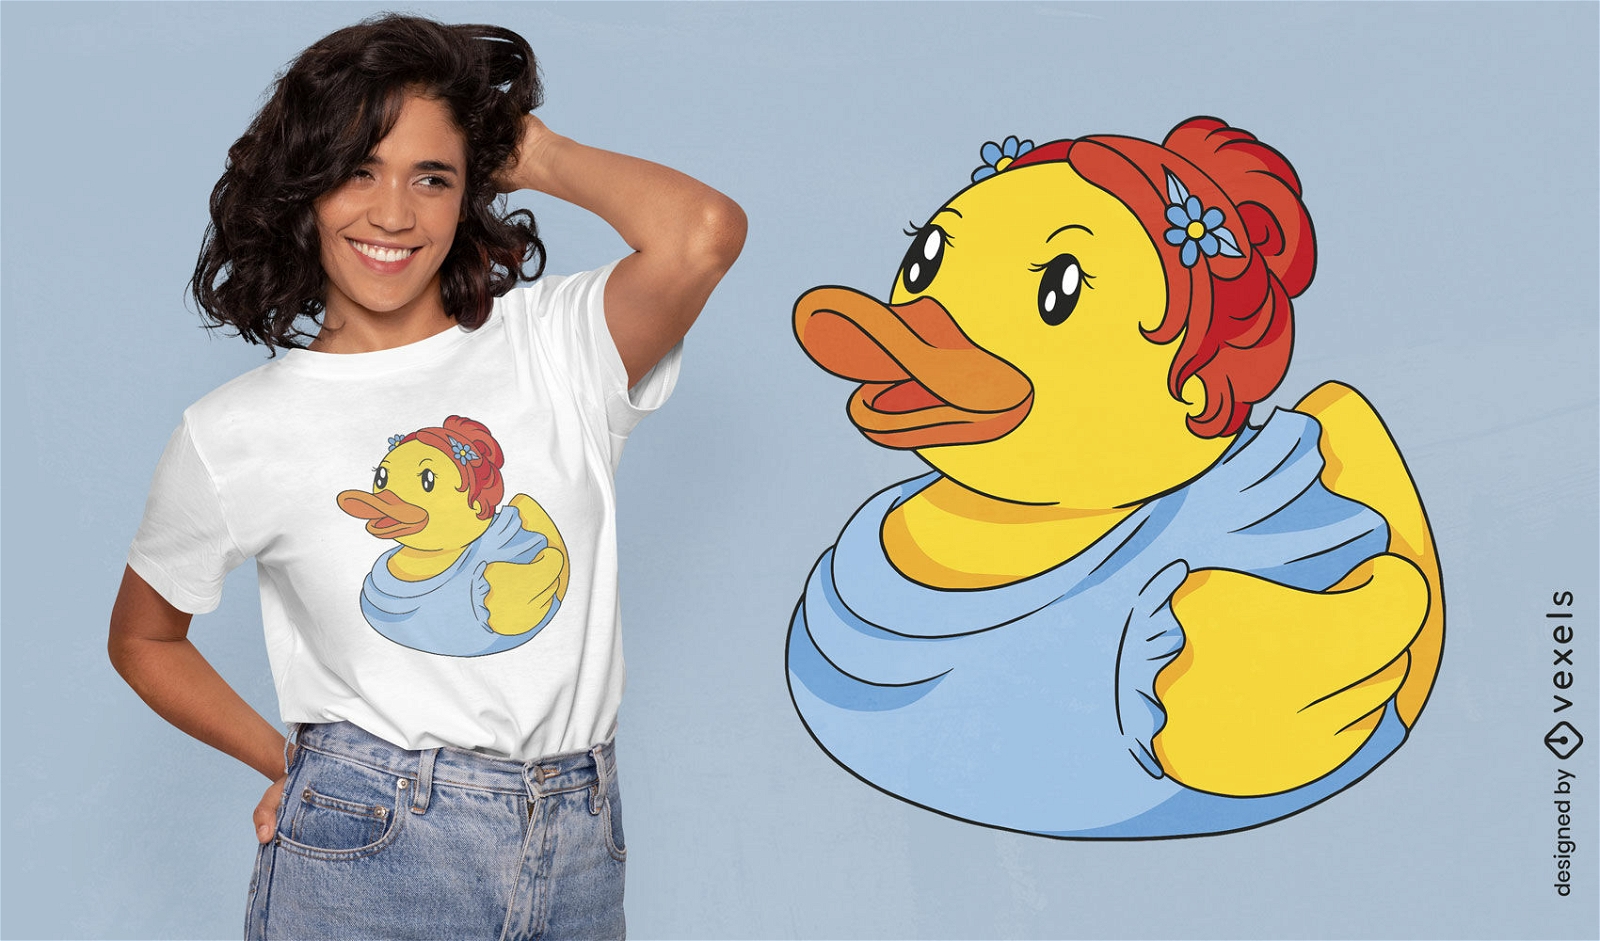 Bridesmaid rubber duck t-shirt design